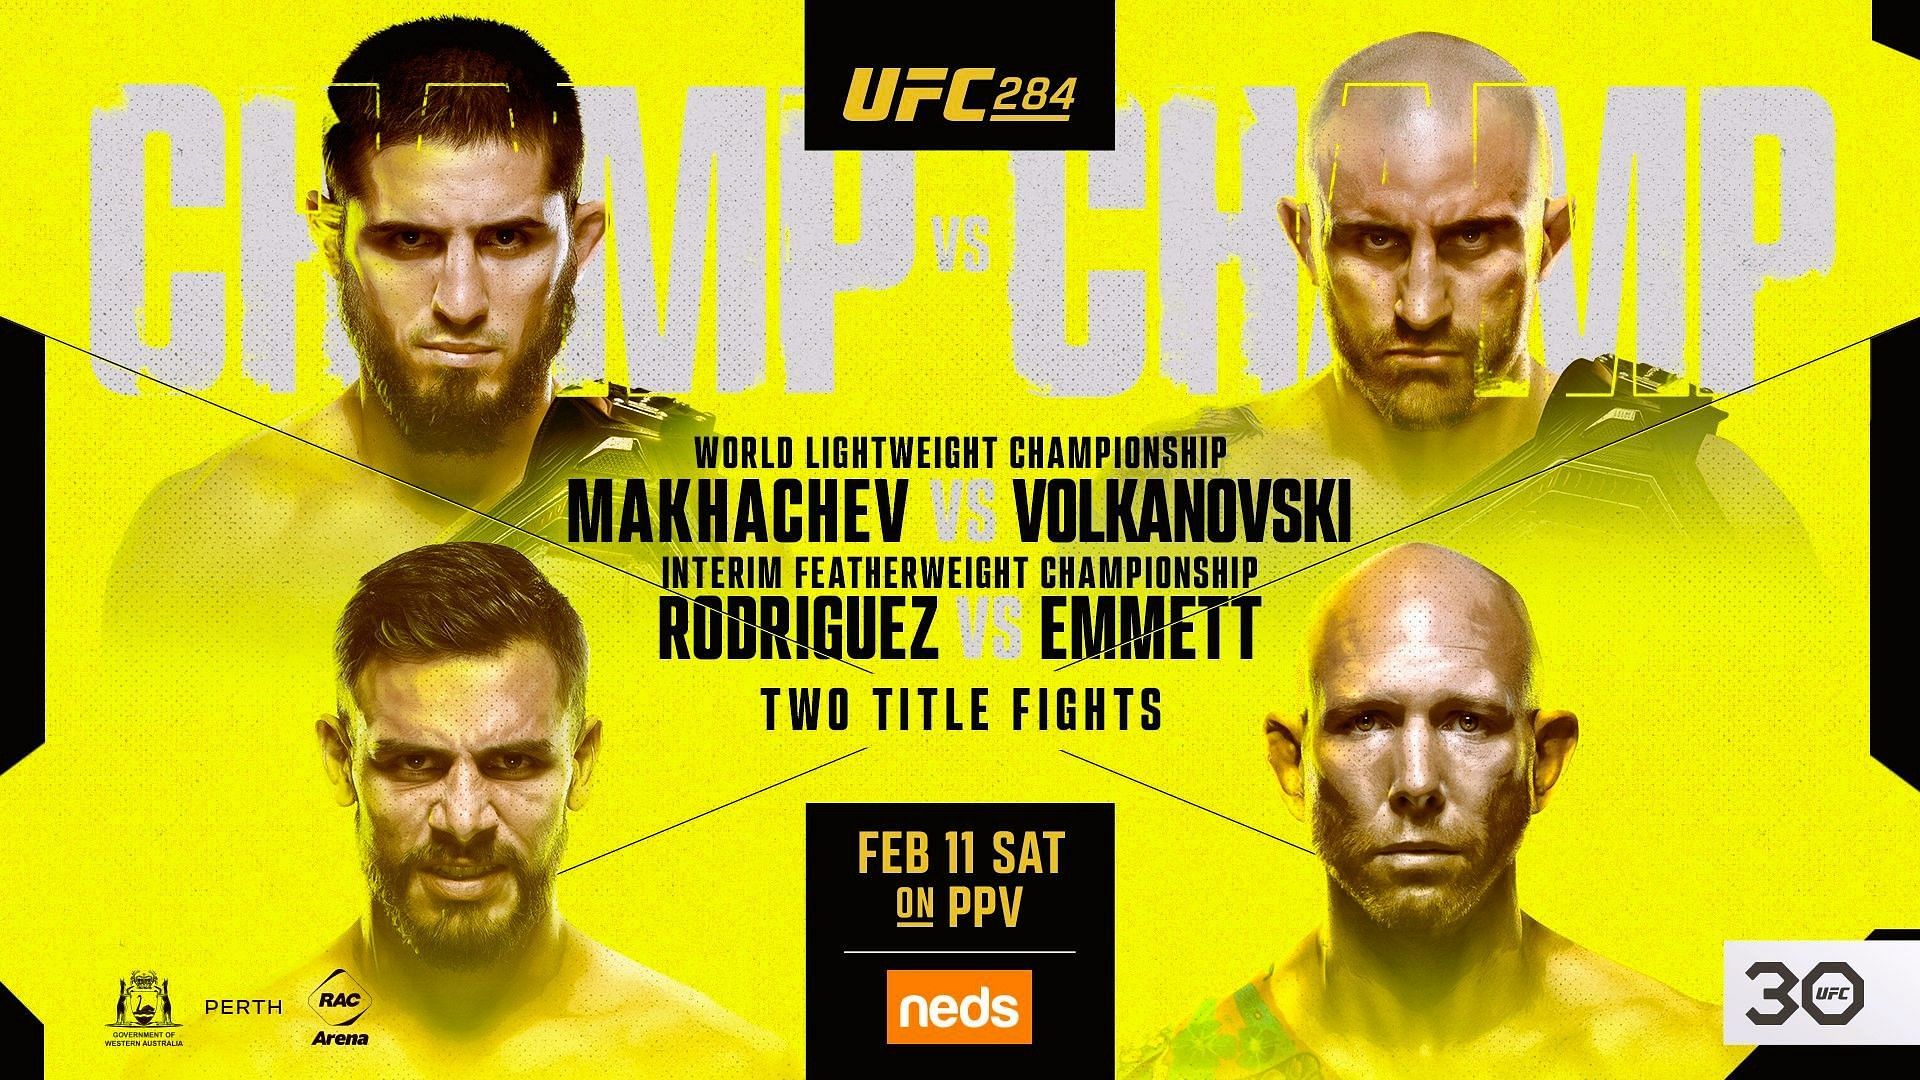 UFC 284 poster [Image via @ufc on Instagram]